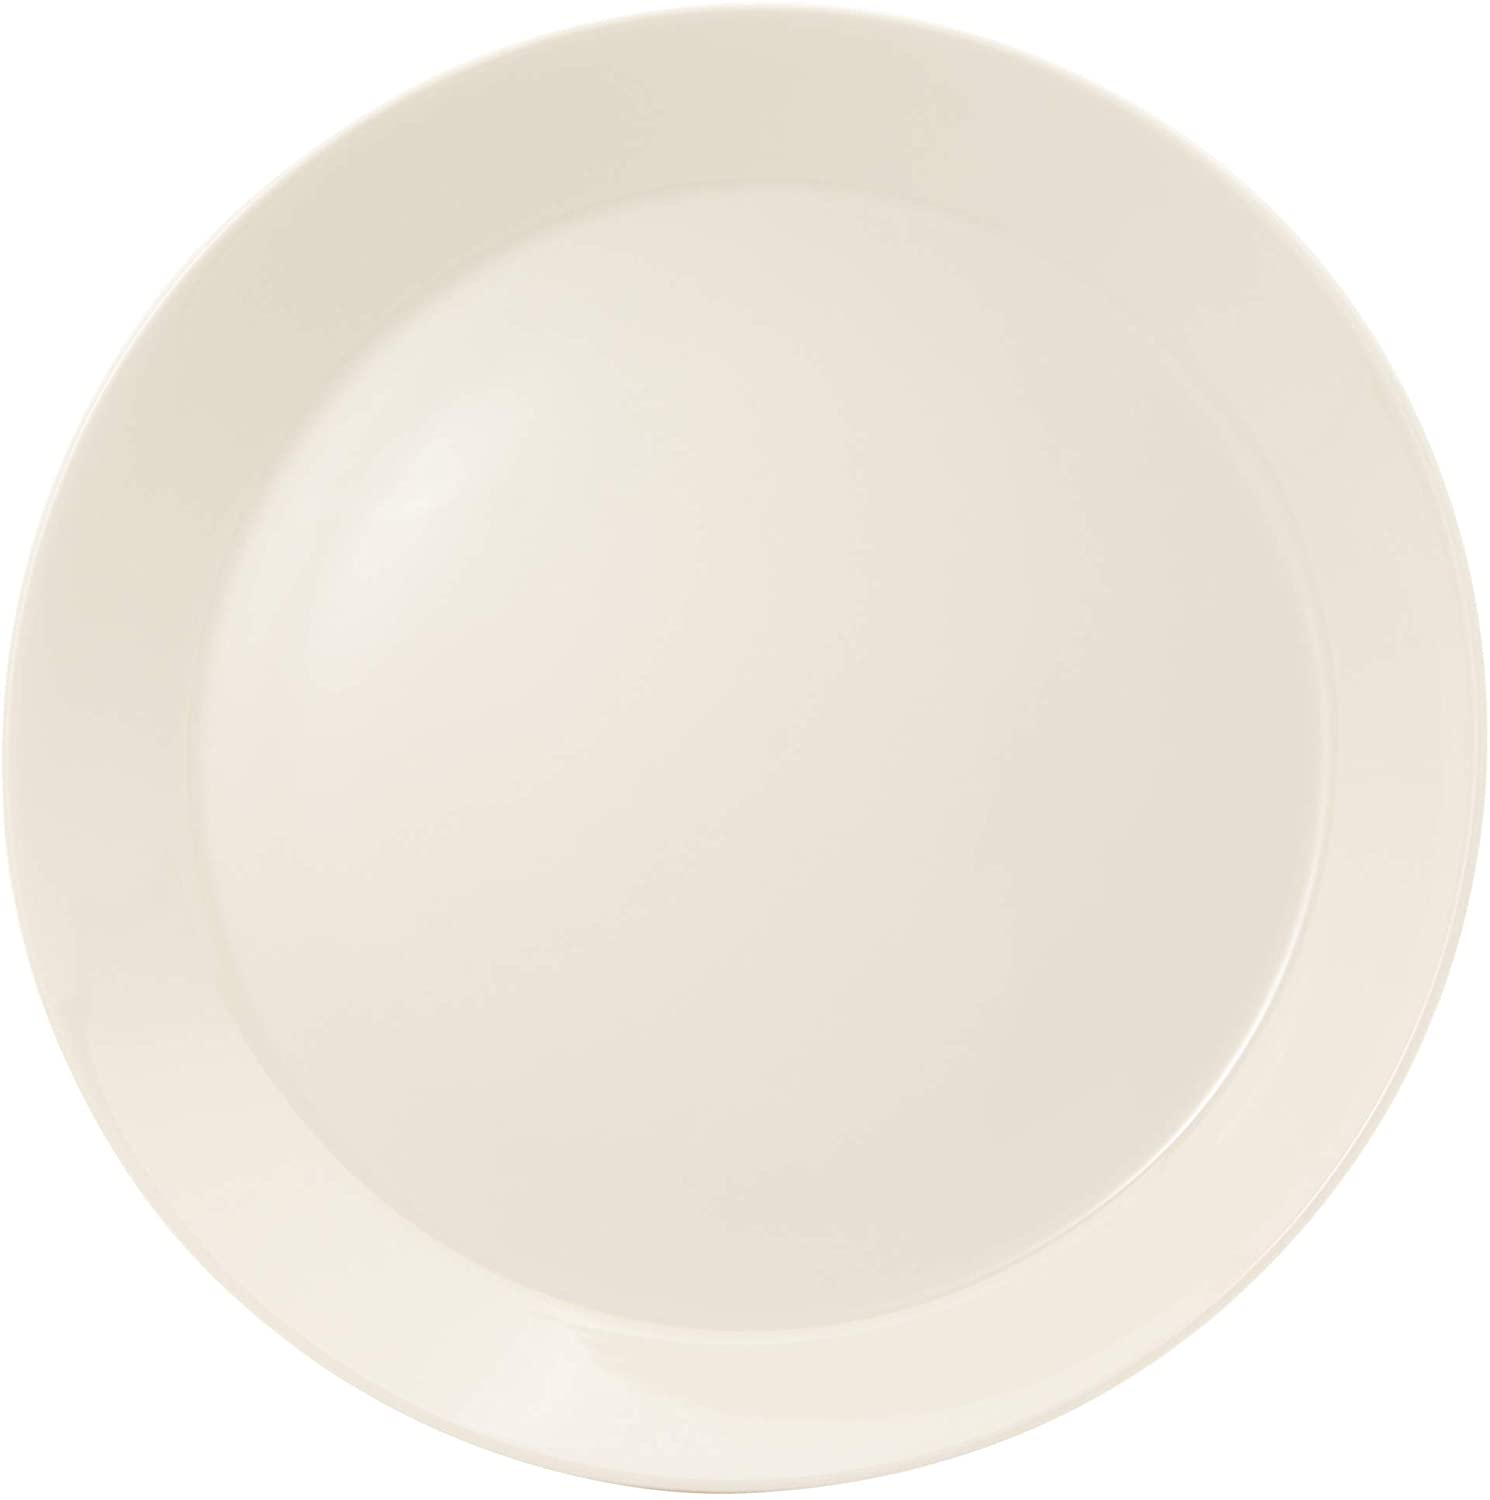 Iittala Teema Plate 1 Piece White / Diameter 26 cm